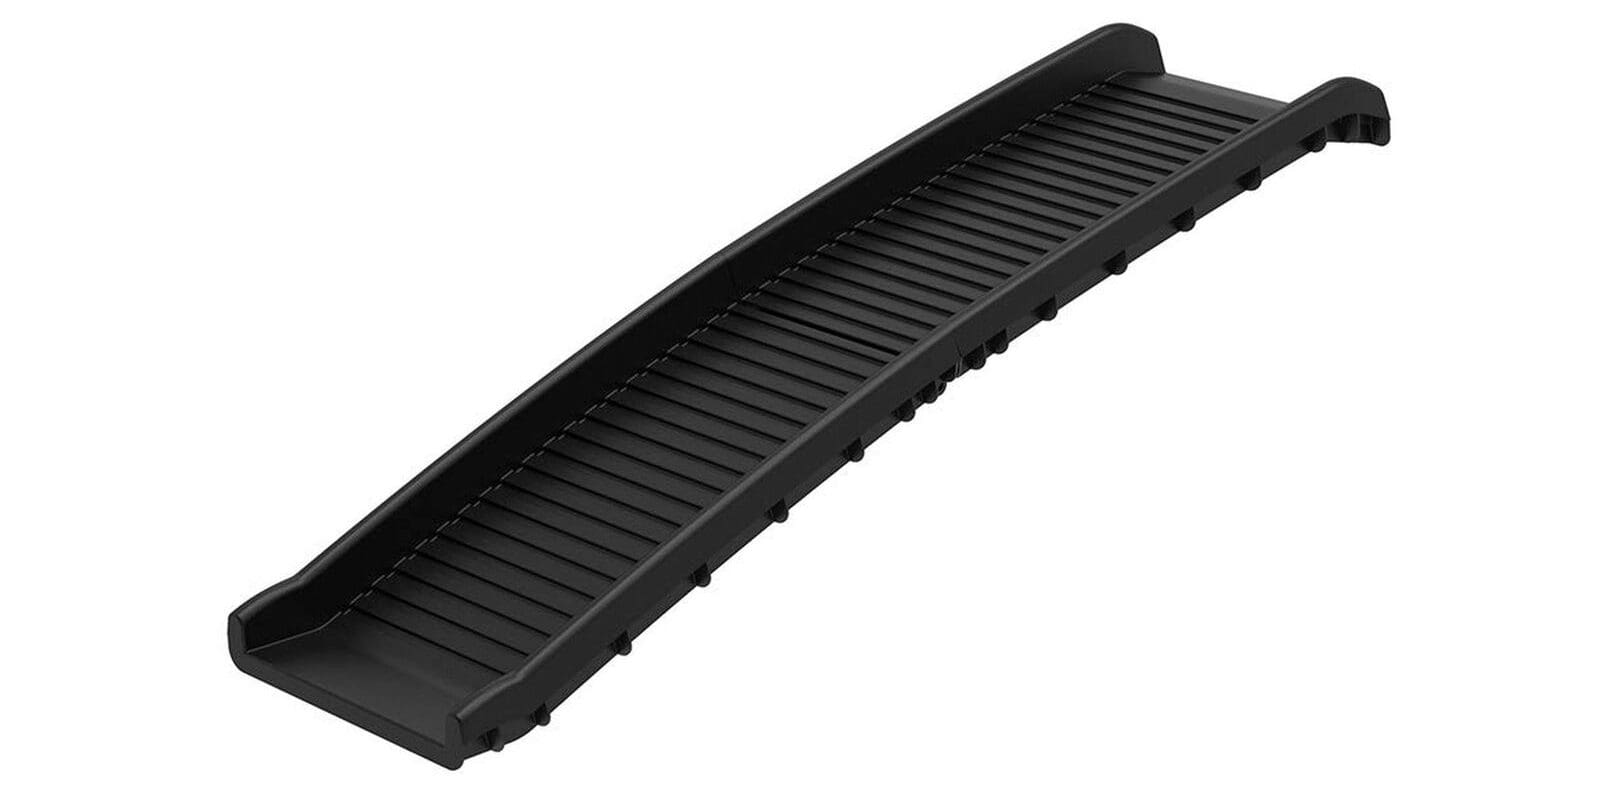 A black plastic ramp is shown.